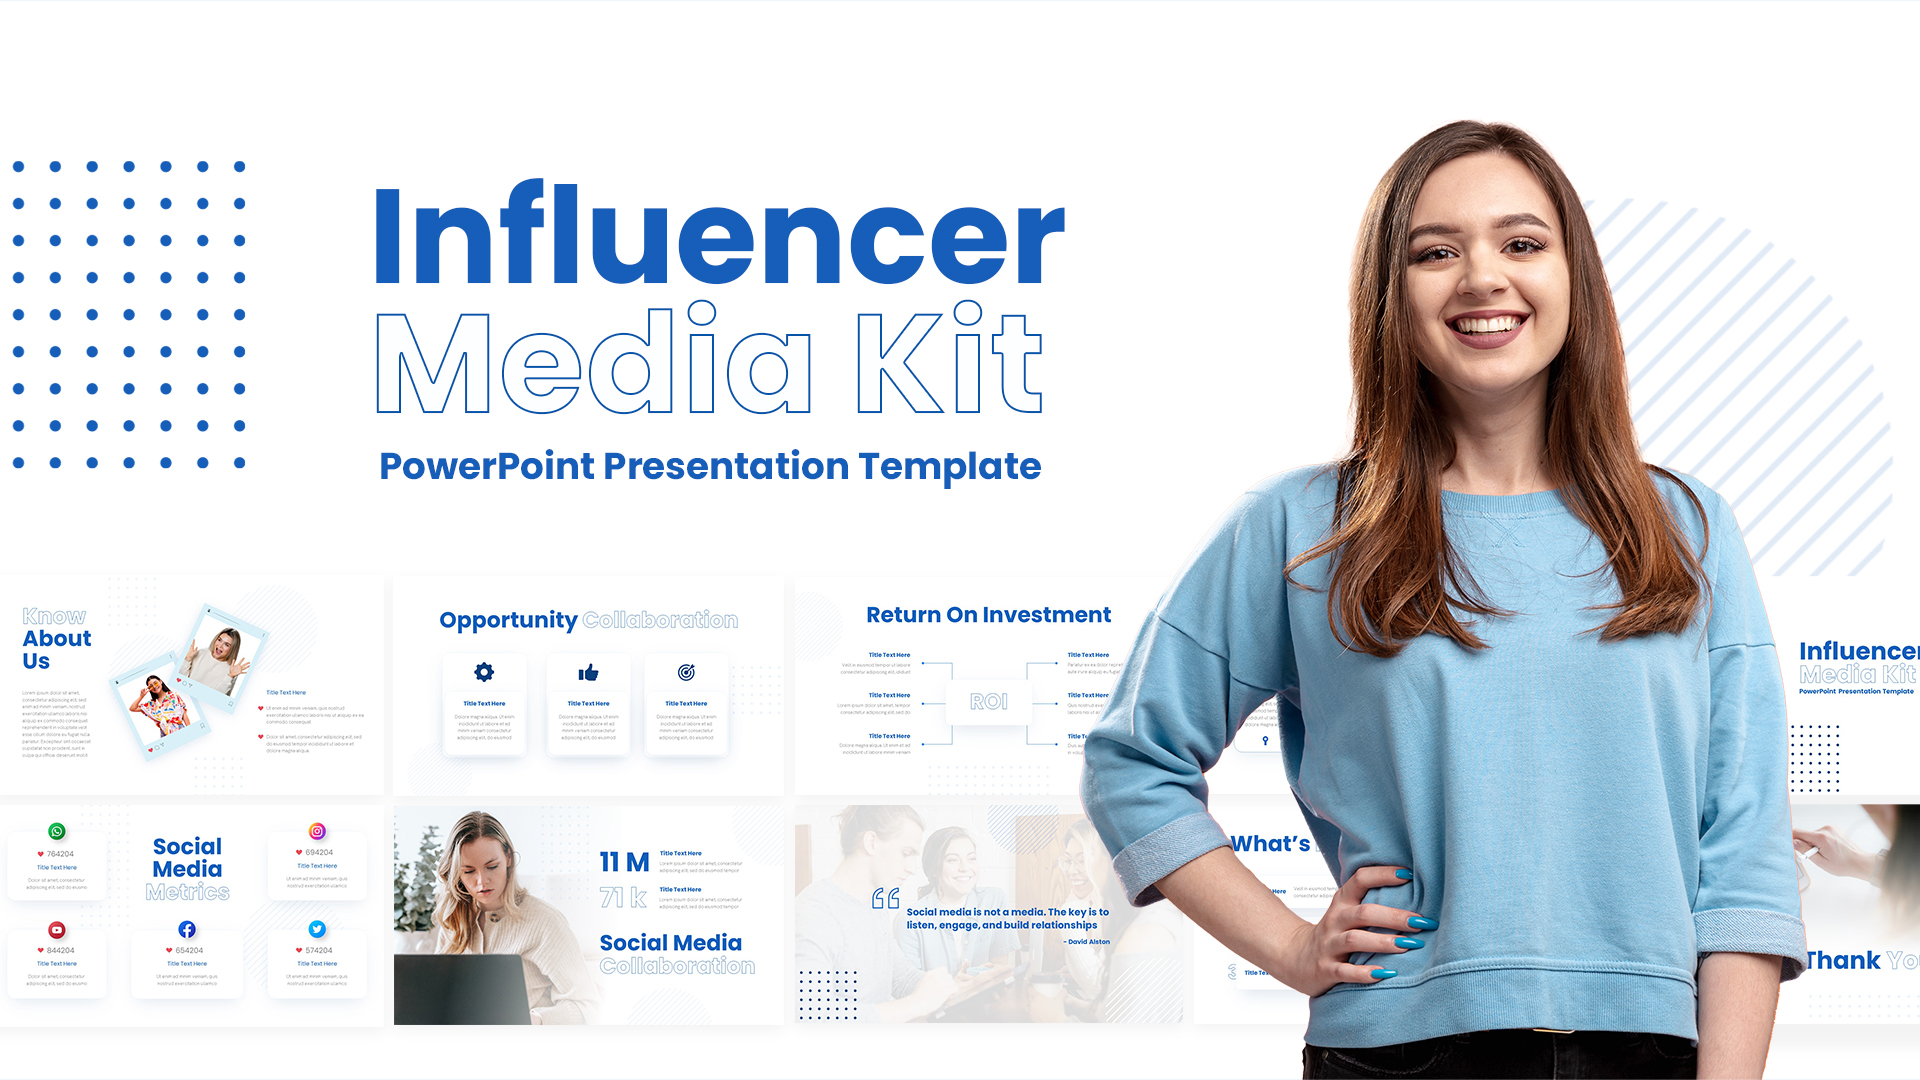 Influencer Media Kit PowerPoint Template